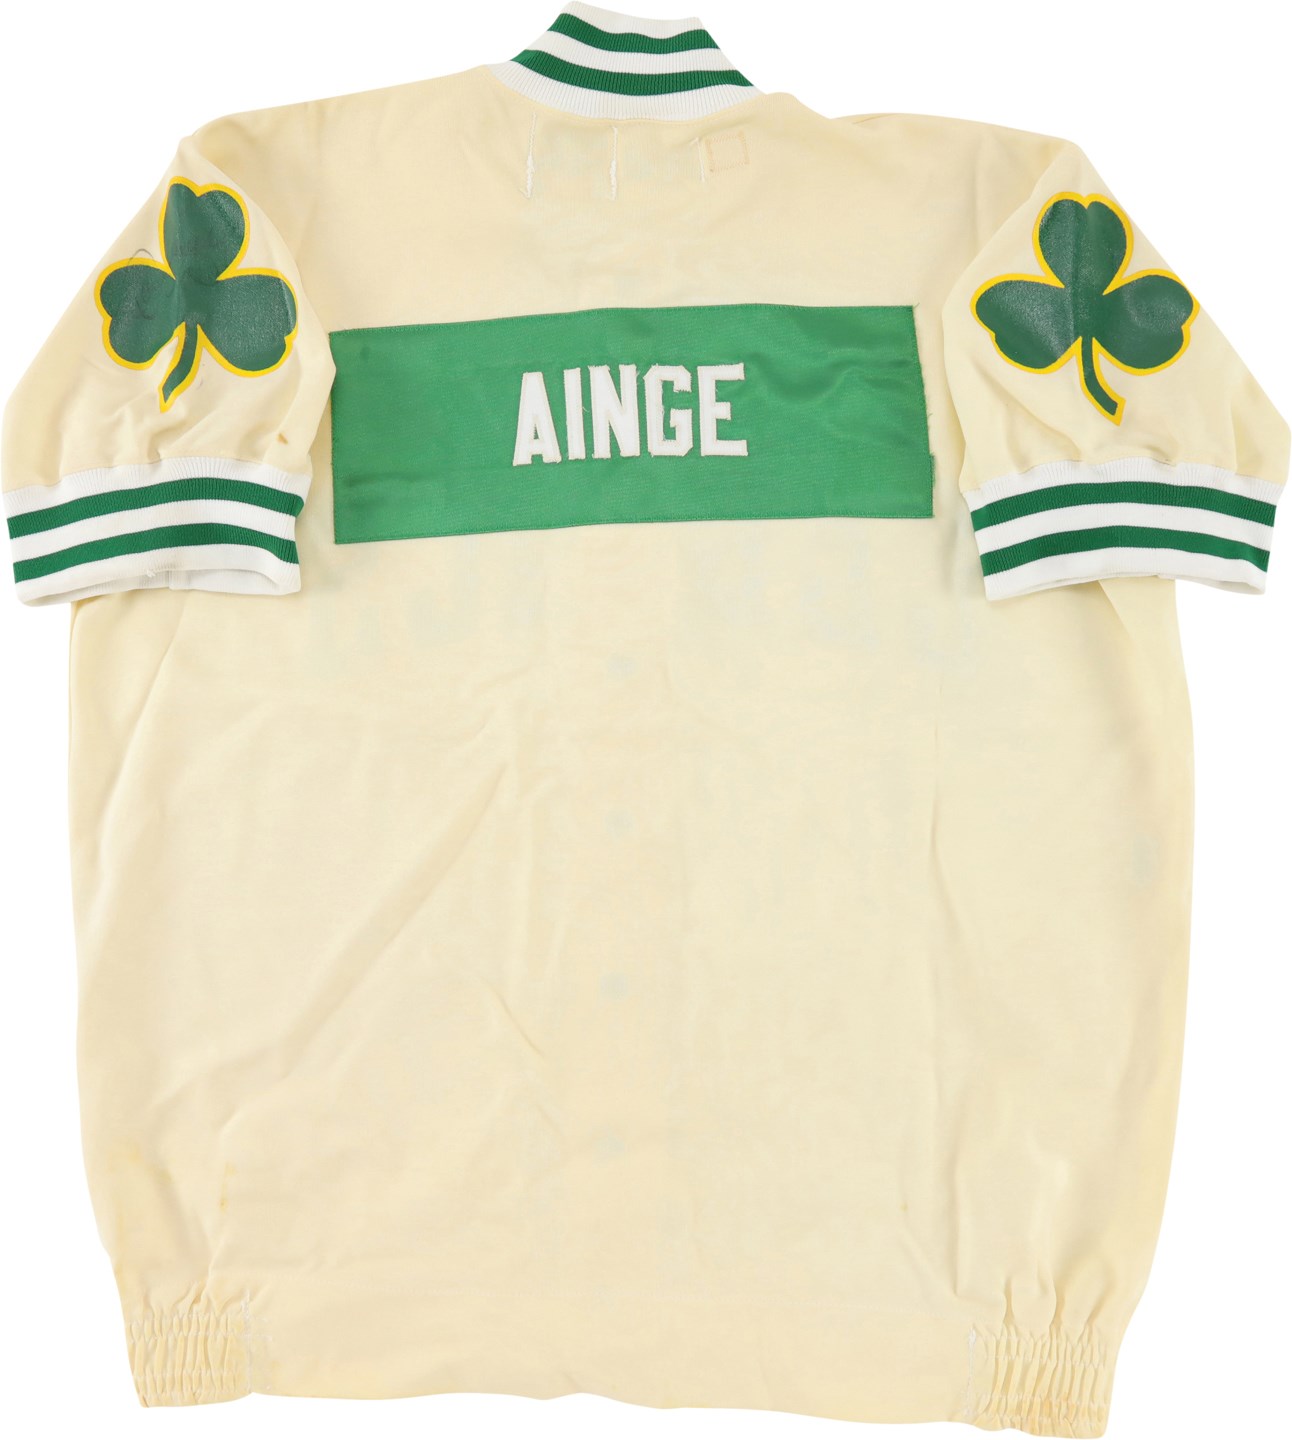 - 1988-89 Danny Ainge Game Worn Boston Celtics Warmup Jacket